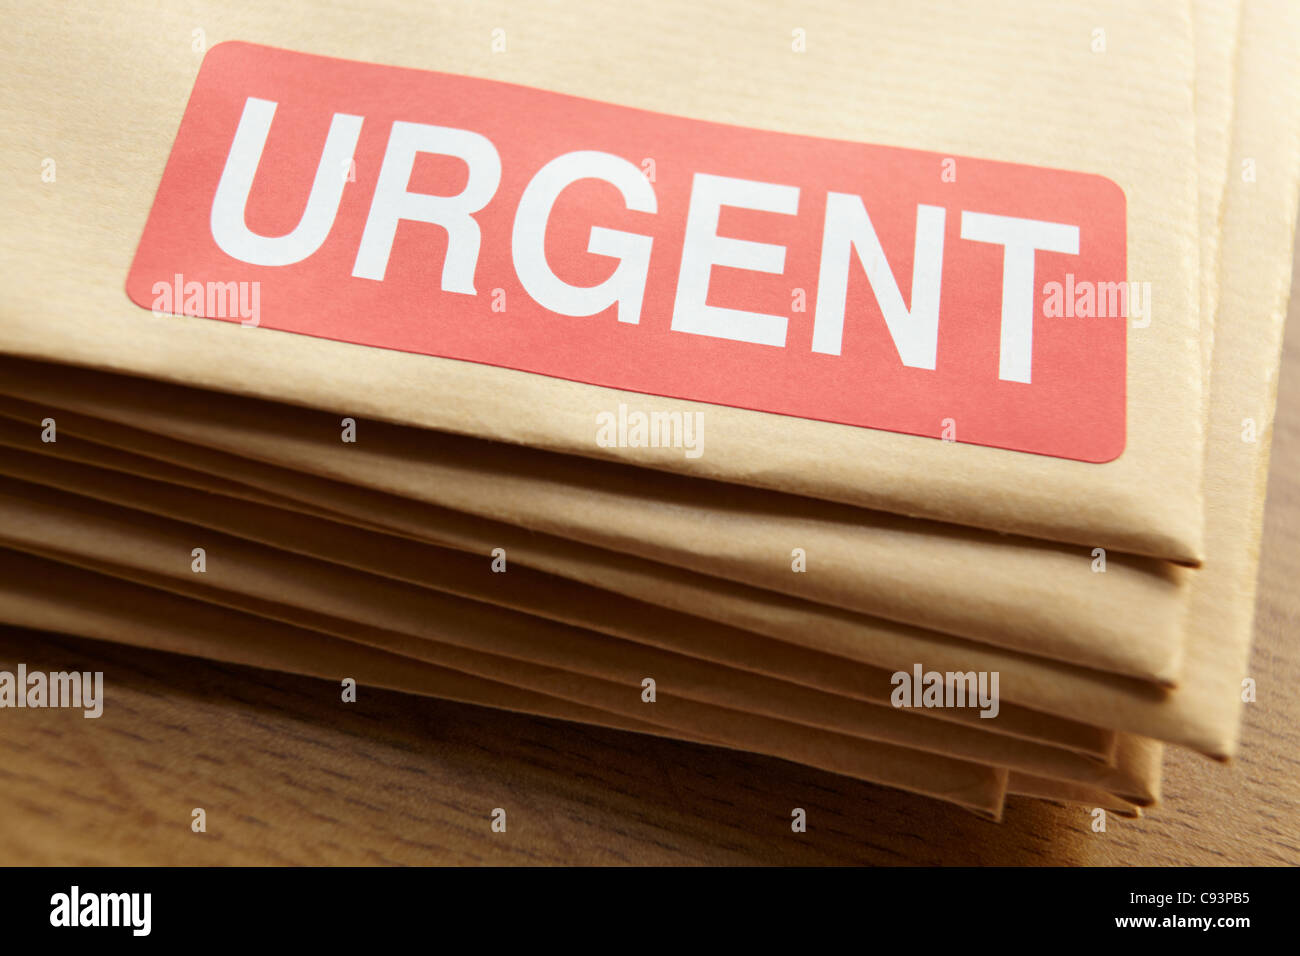 Urgent documents for despatch Stock Photo